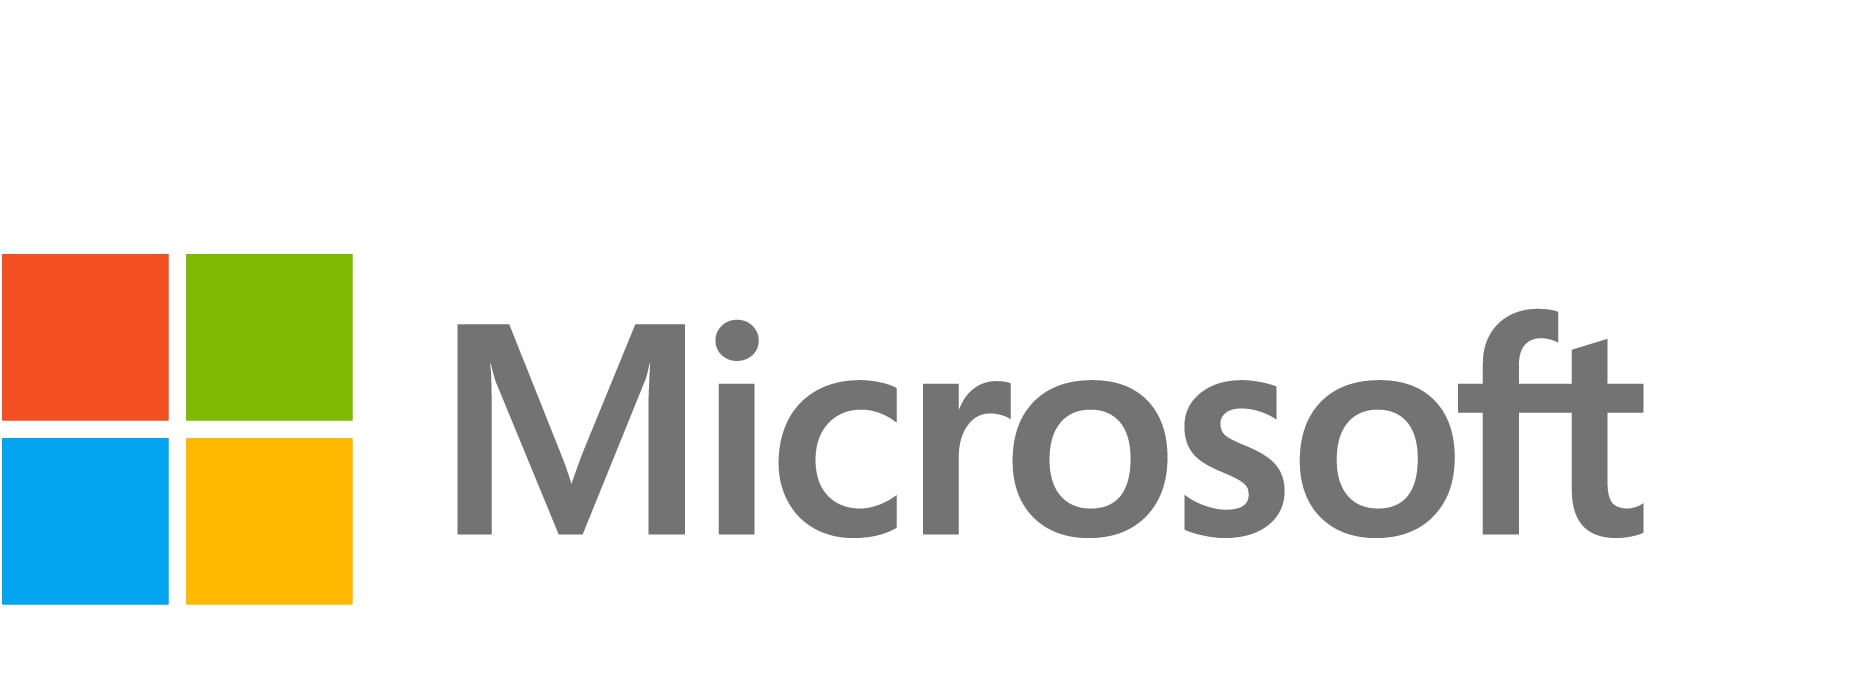 Microsoft Teams Phone with International Calling